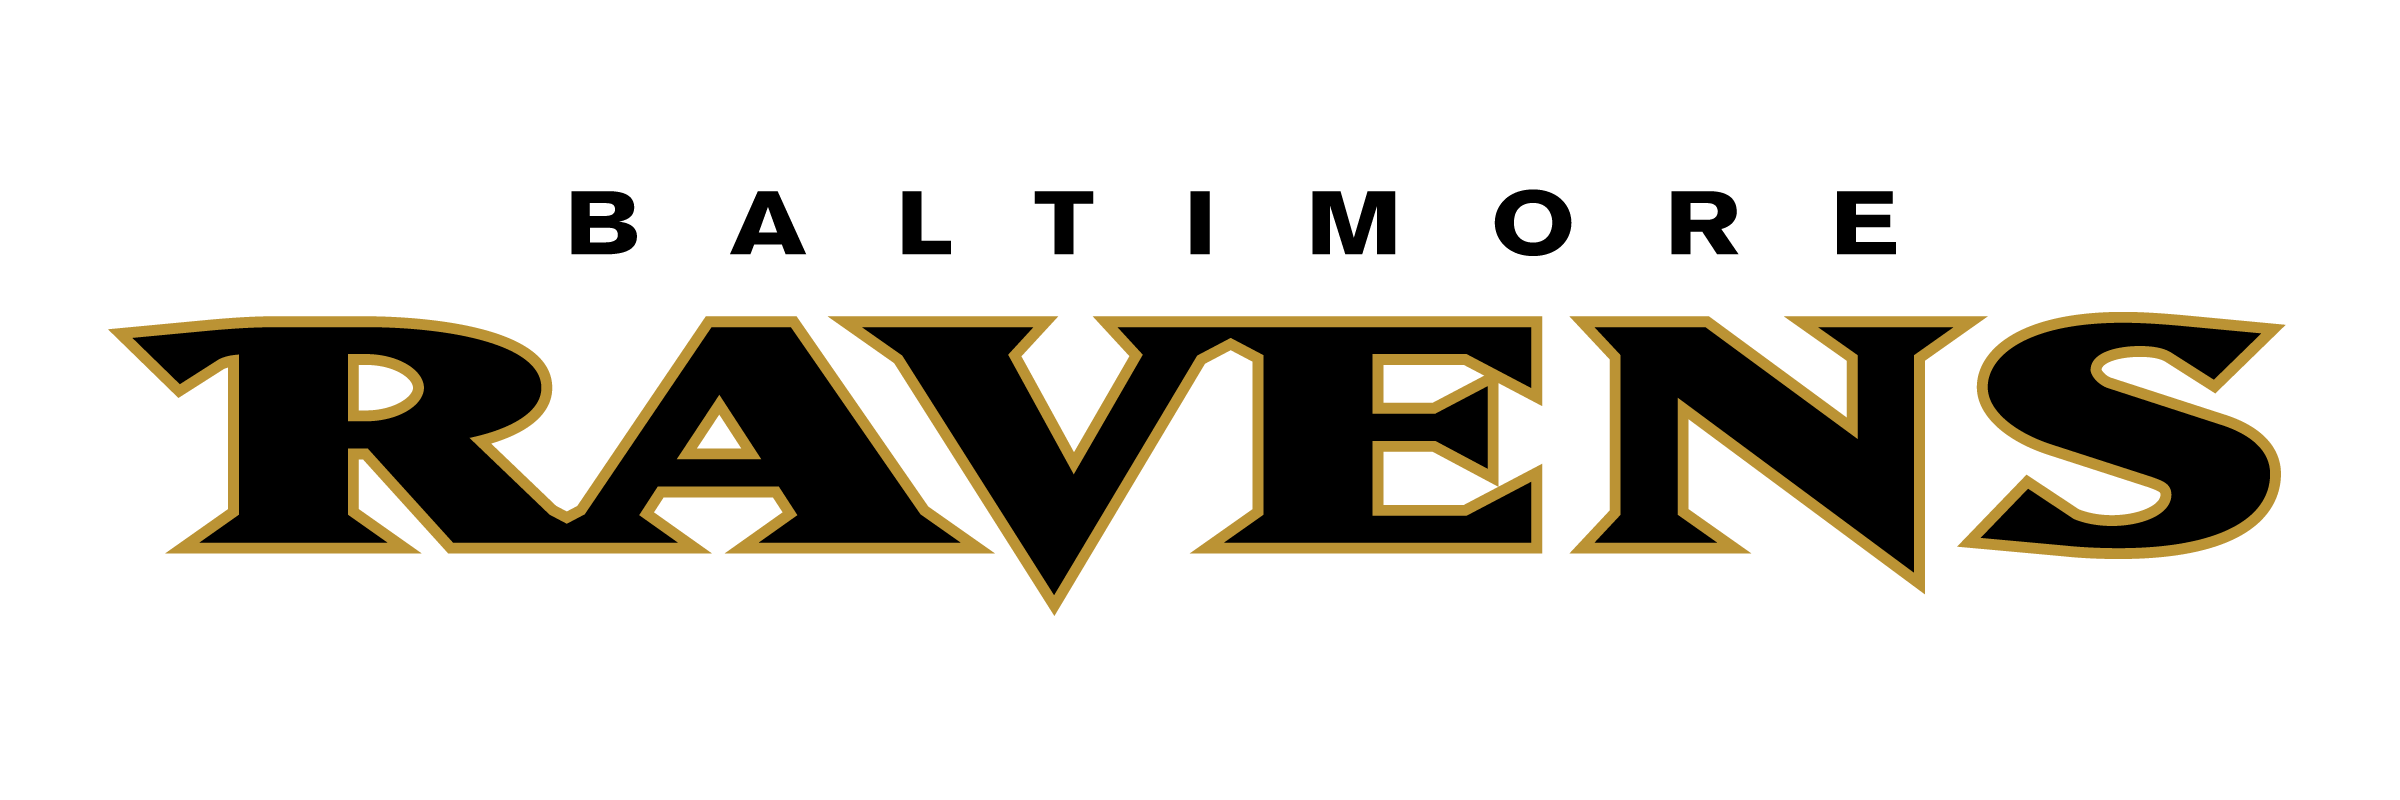 Baltimore Ravens Logo - Baltimore Ravens Logo PNG Transparent & SVG Vector - Freebie Supply